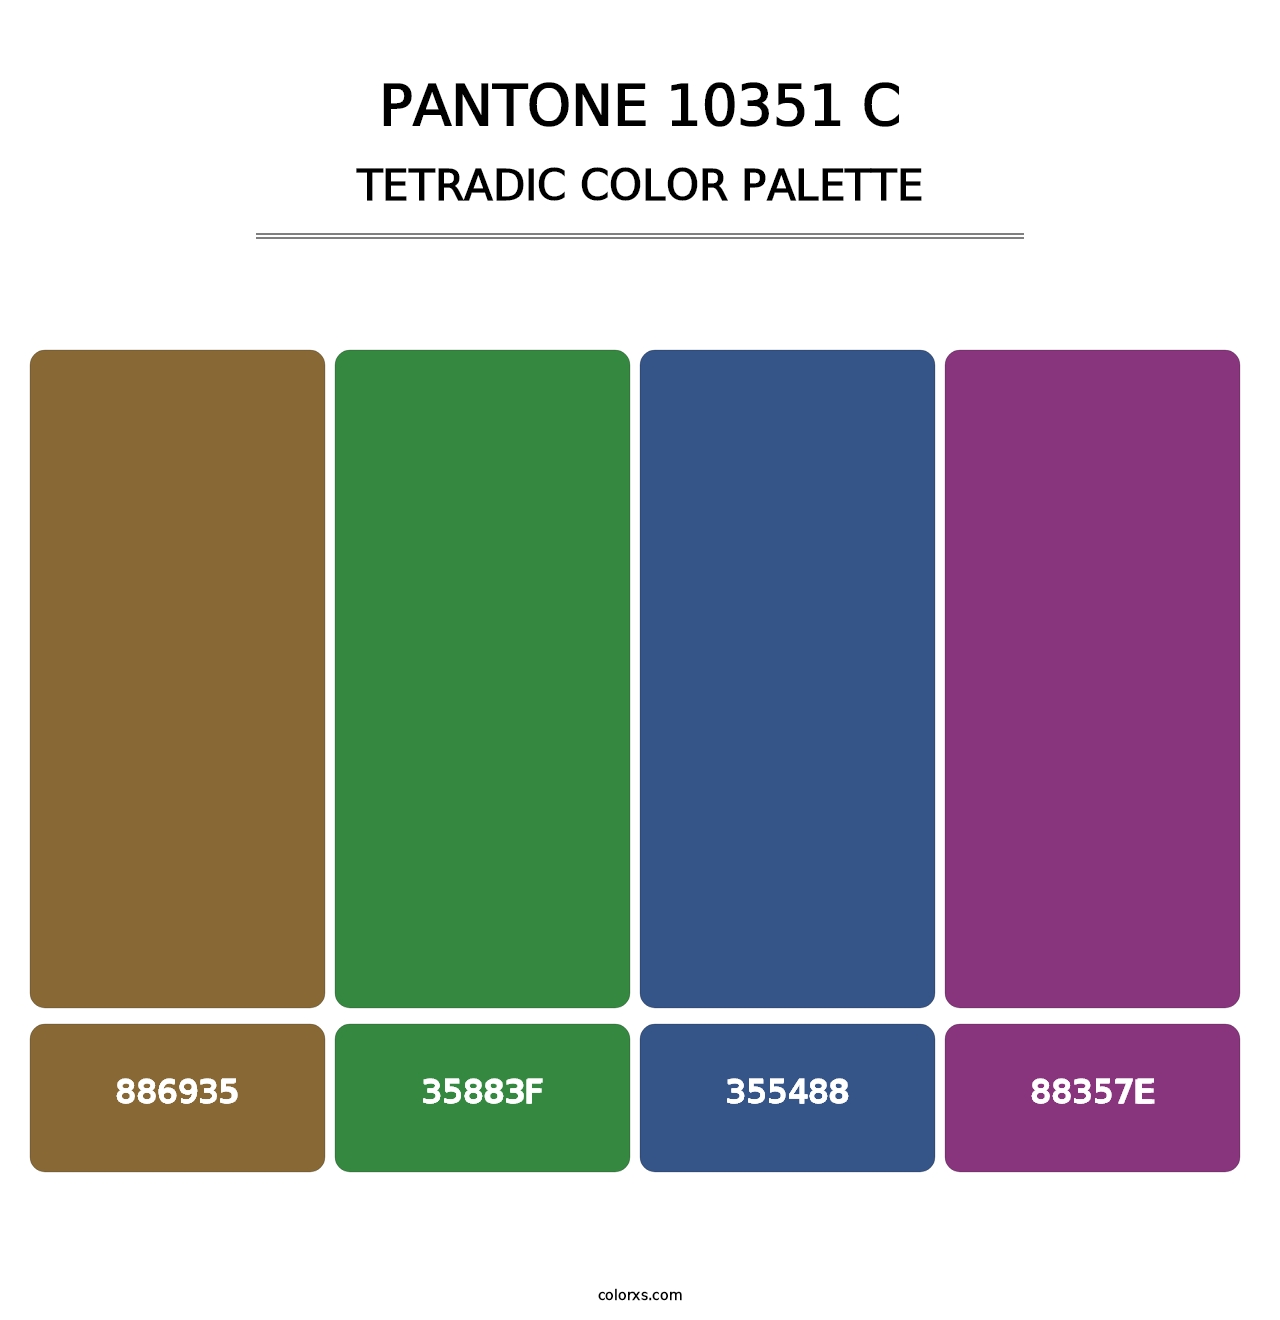 PANTONE 10351 C - Tetradic Color Palette